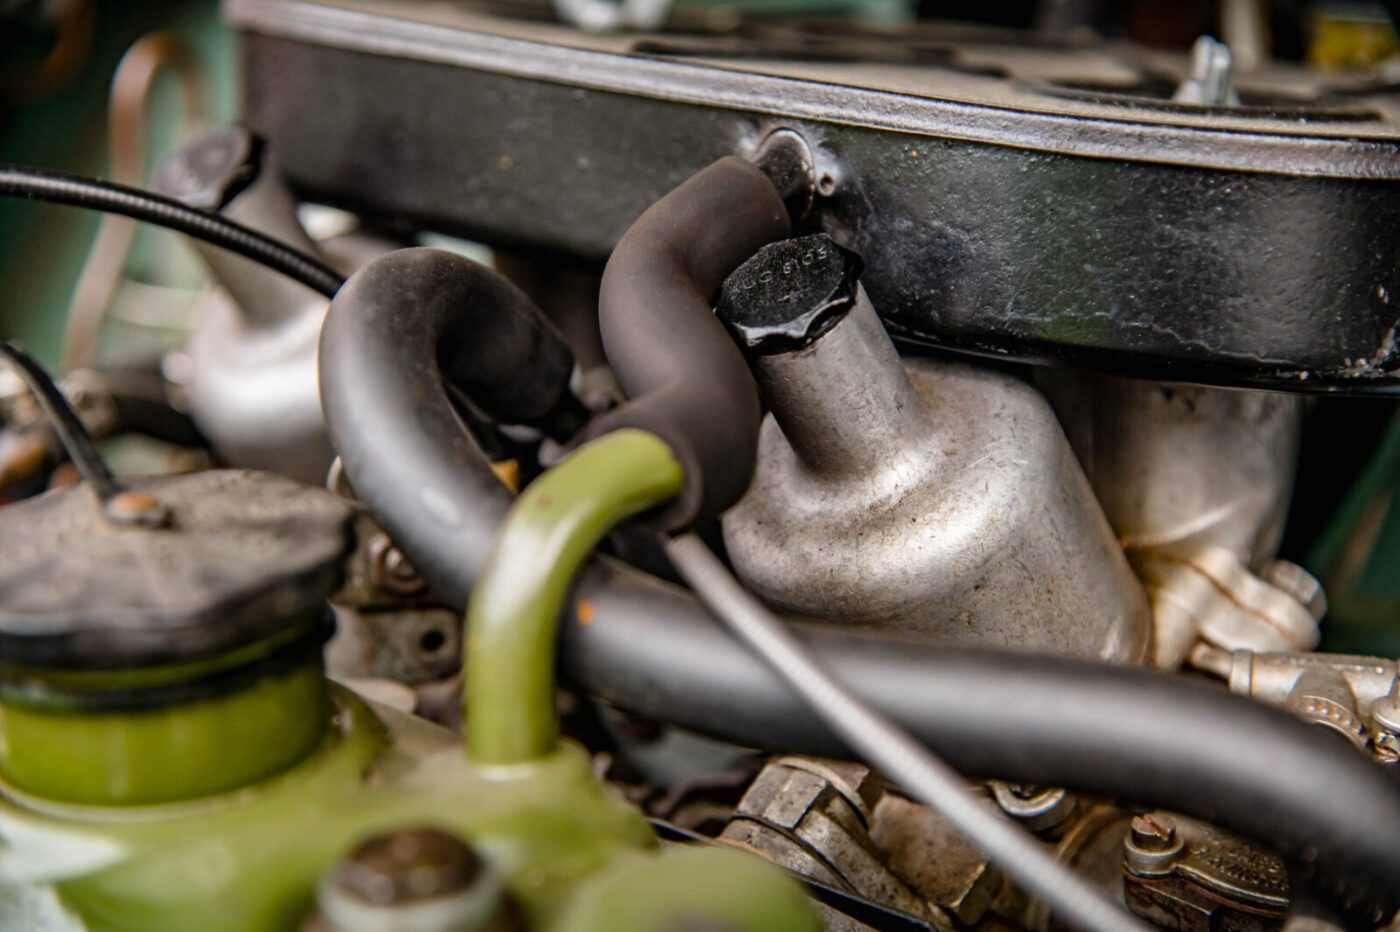 Mini Cooper engine detail